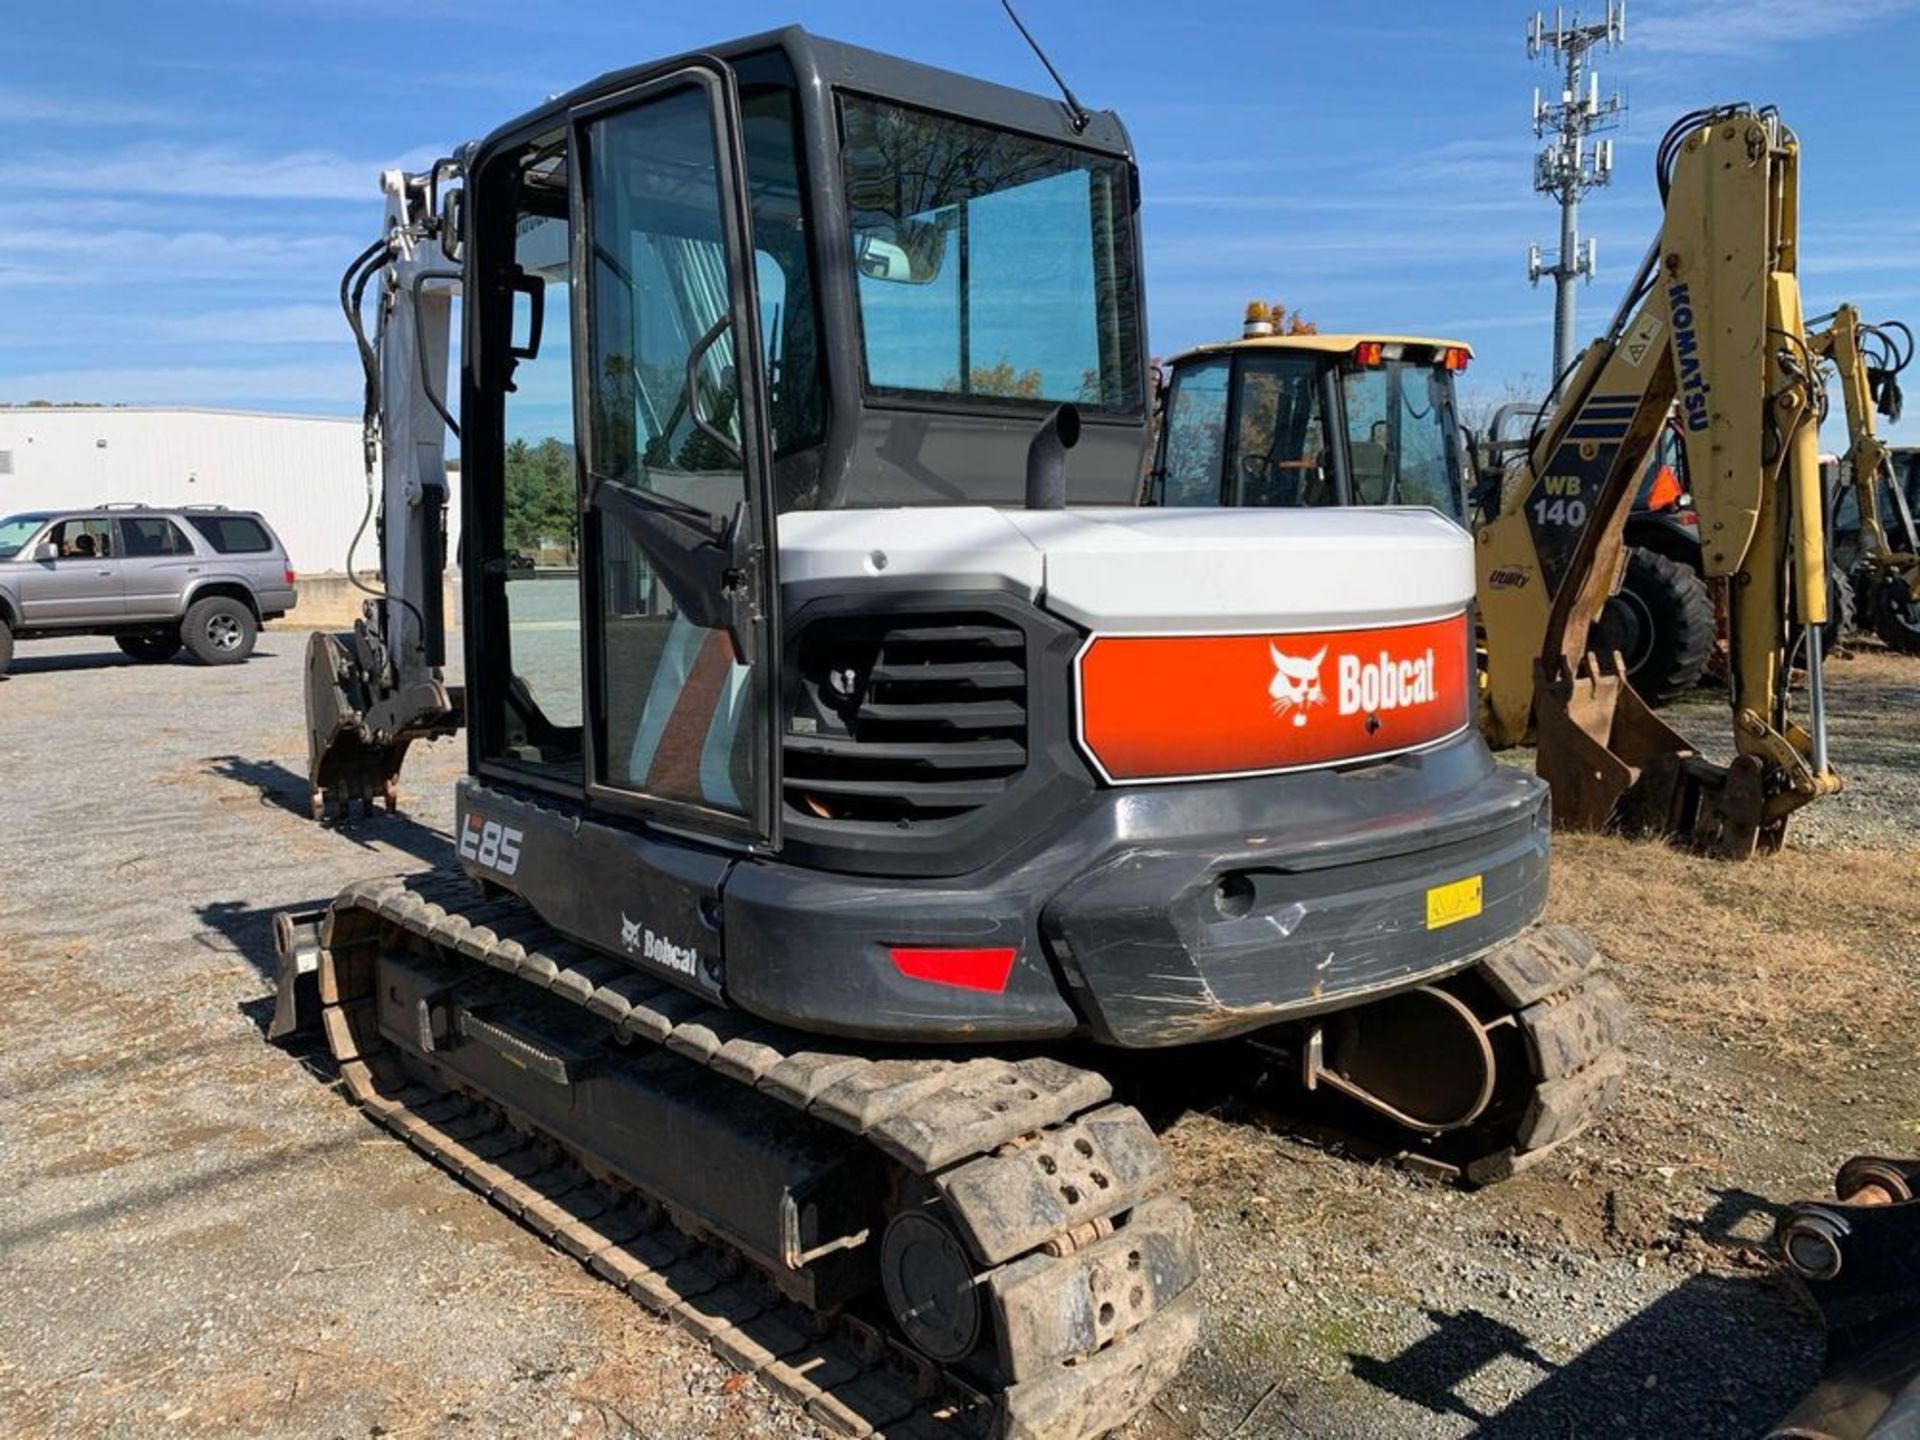 2018 Bobcat E85 R Series Excavator - Image 18 of 85